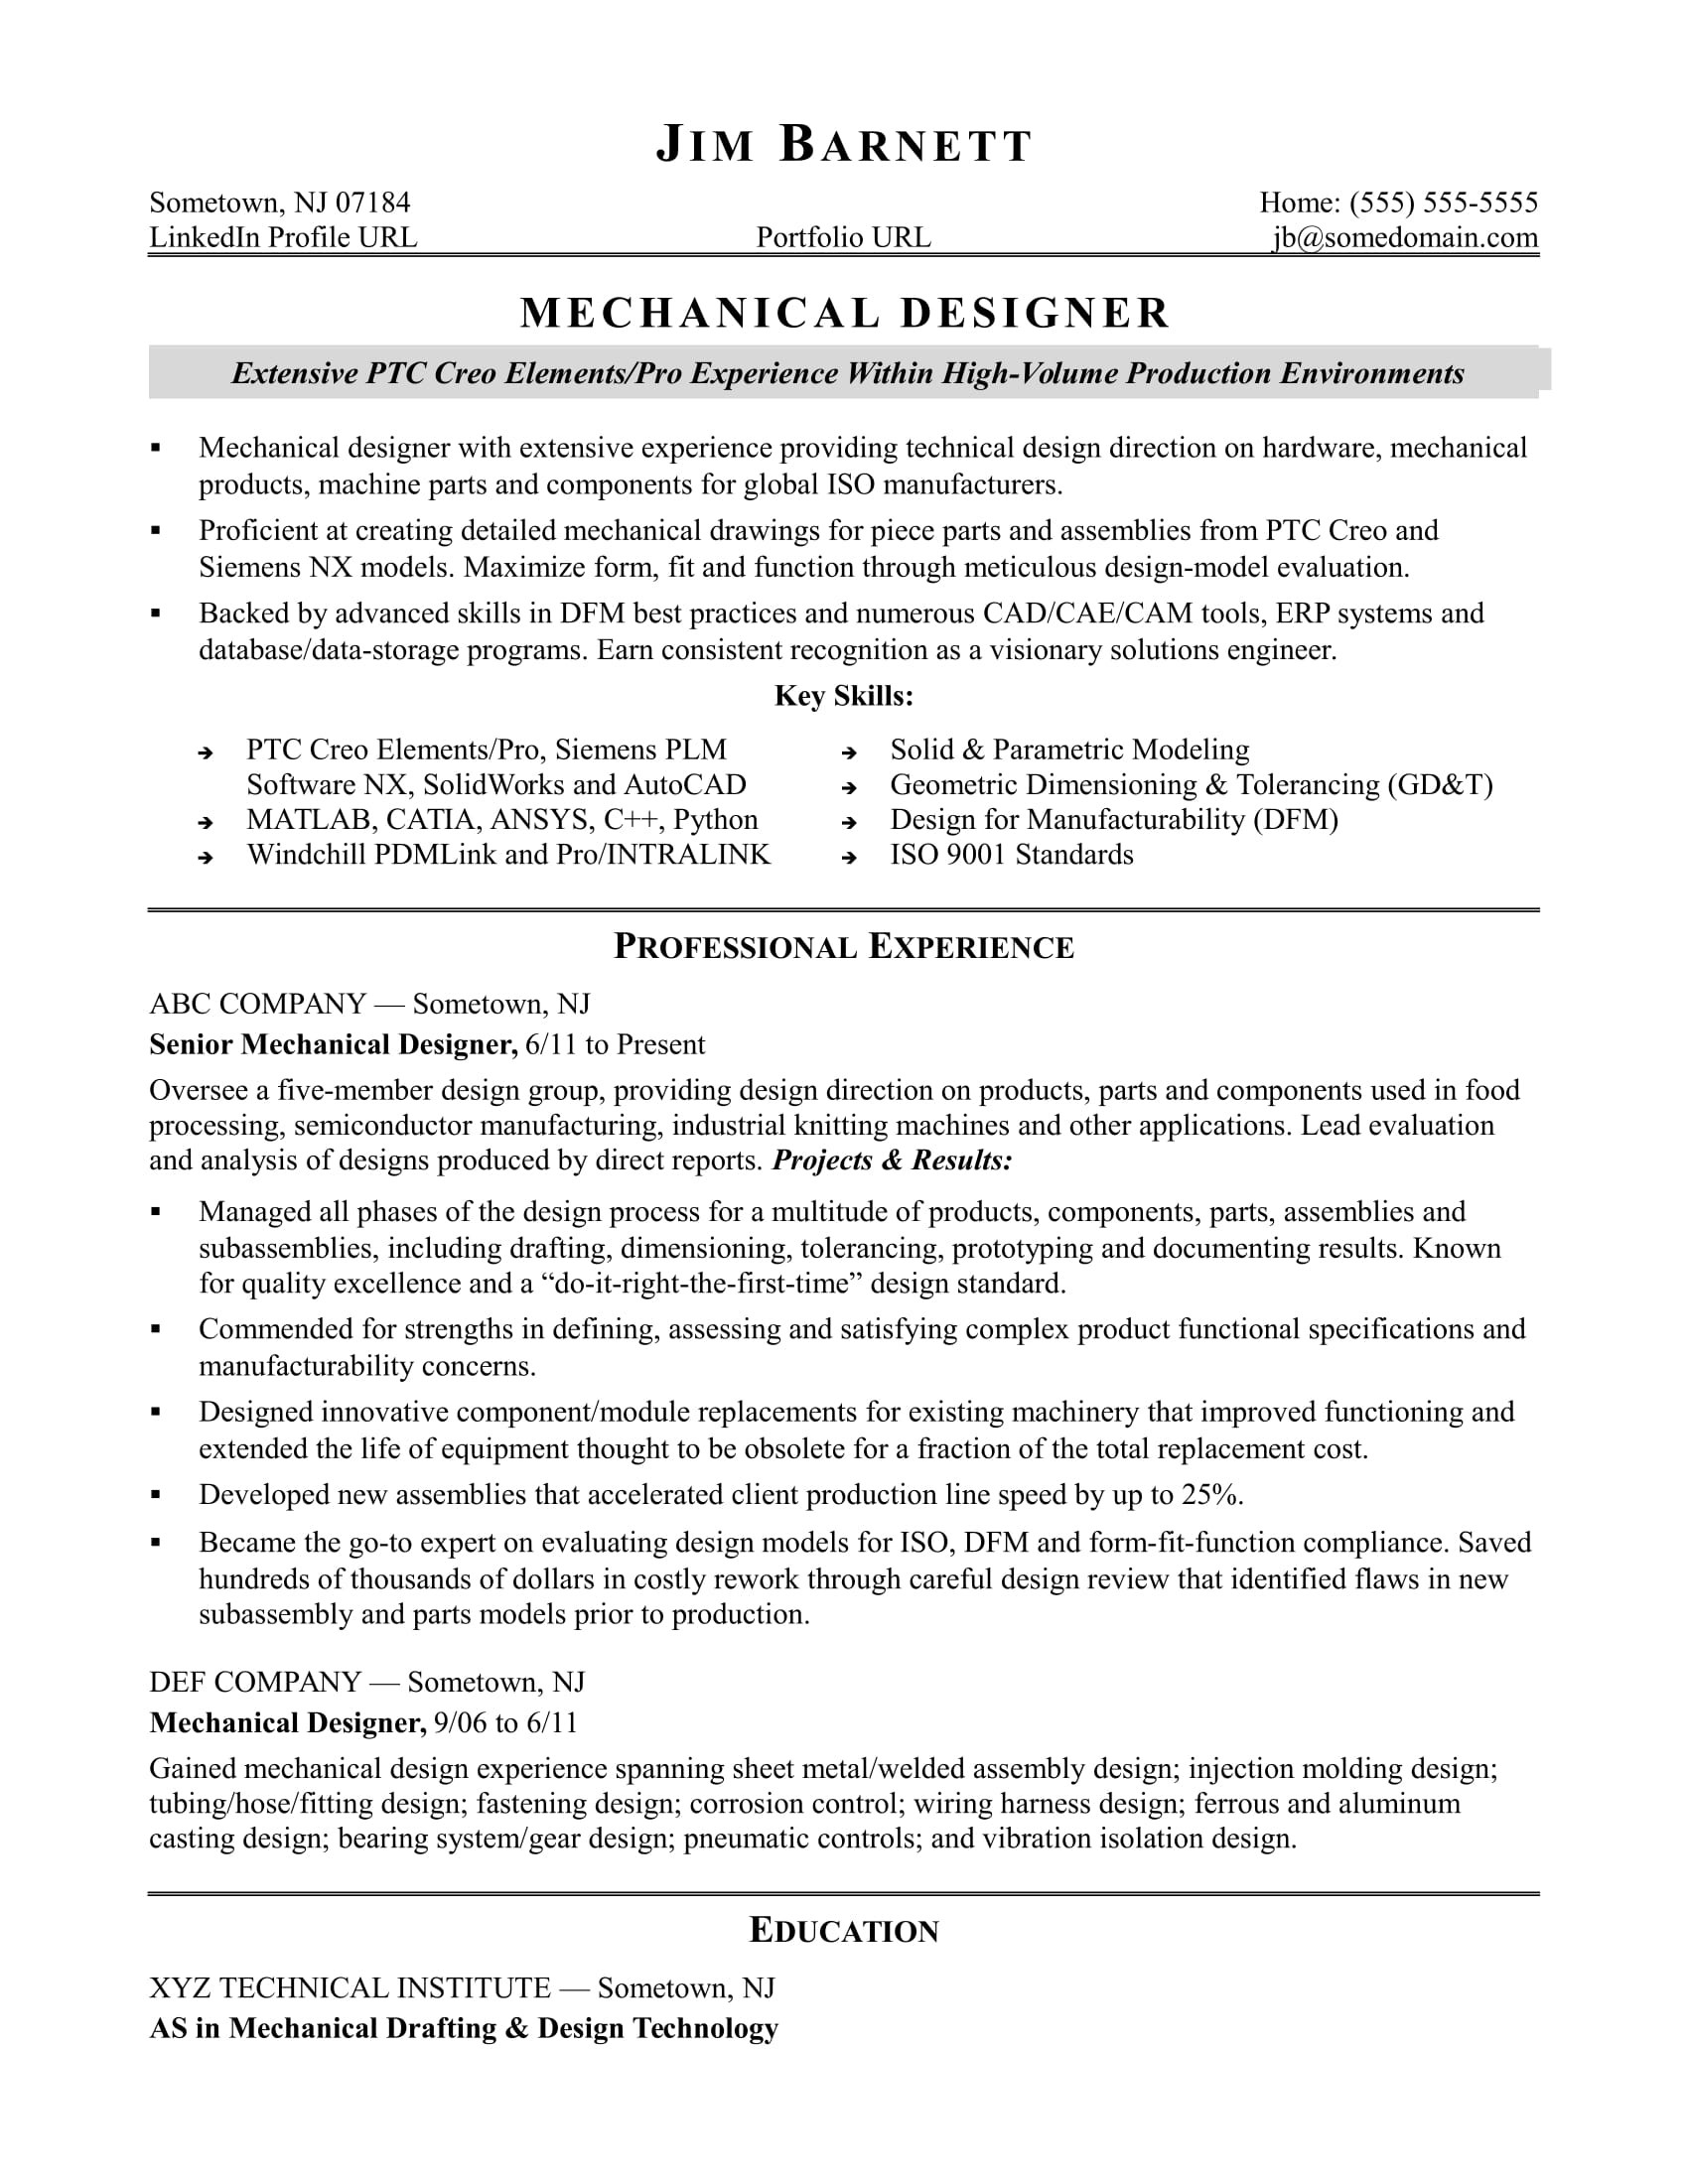 sample resume mechanical designer experienced